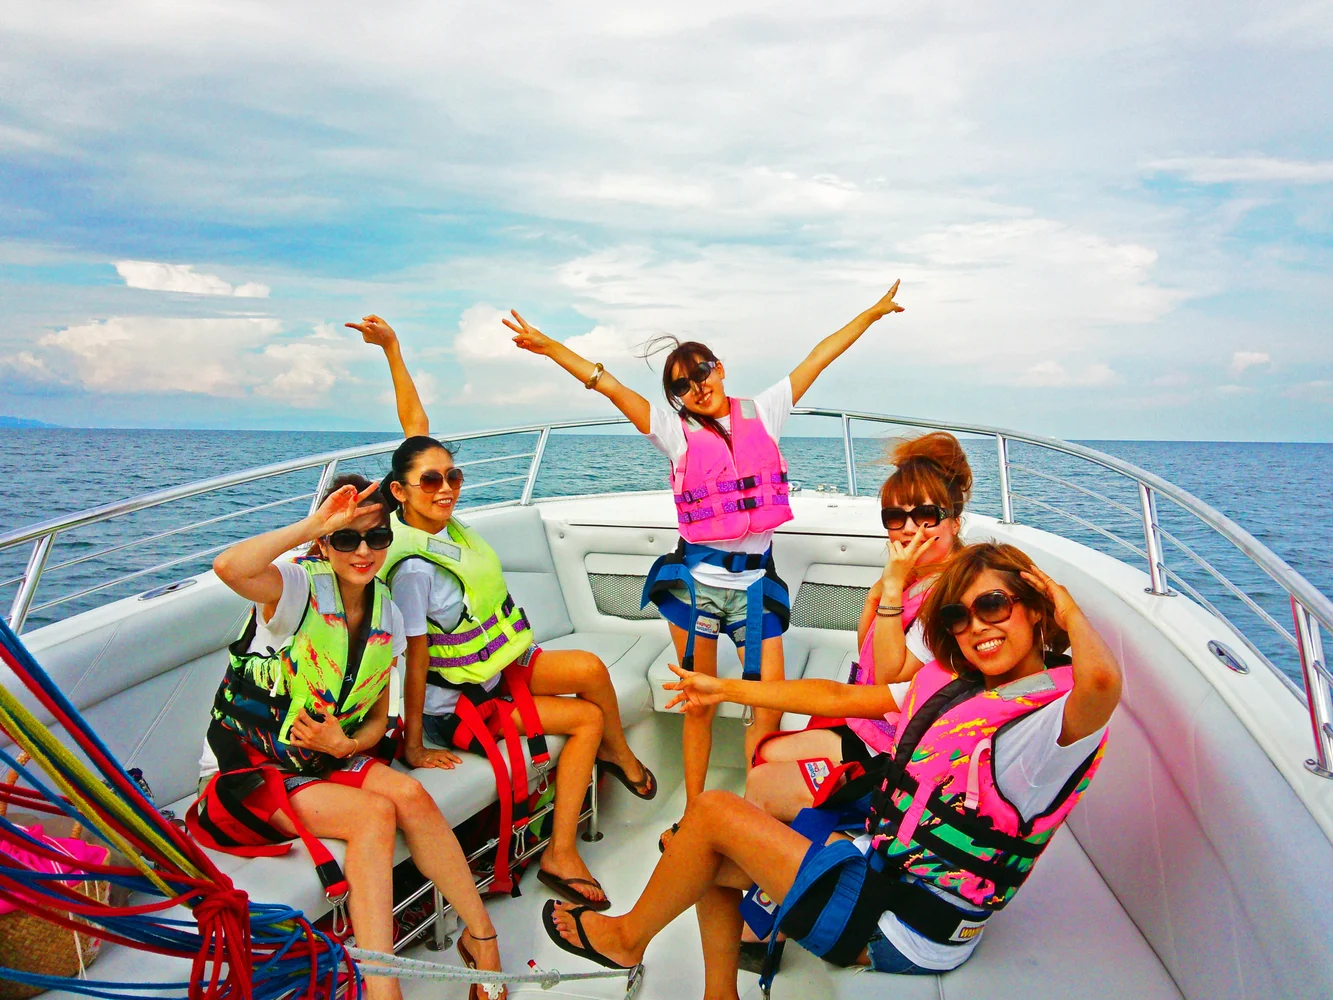 Awaji Island Jet Boating and Parasailing Experiences